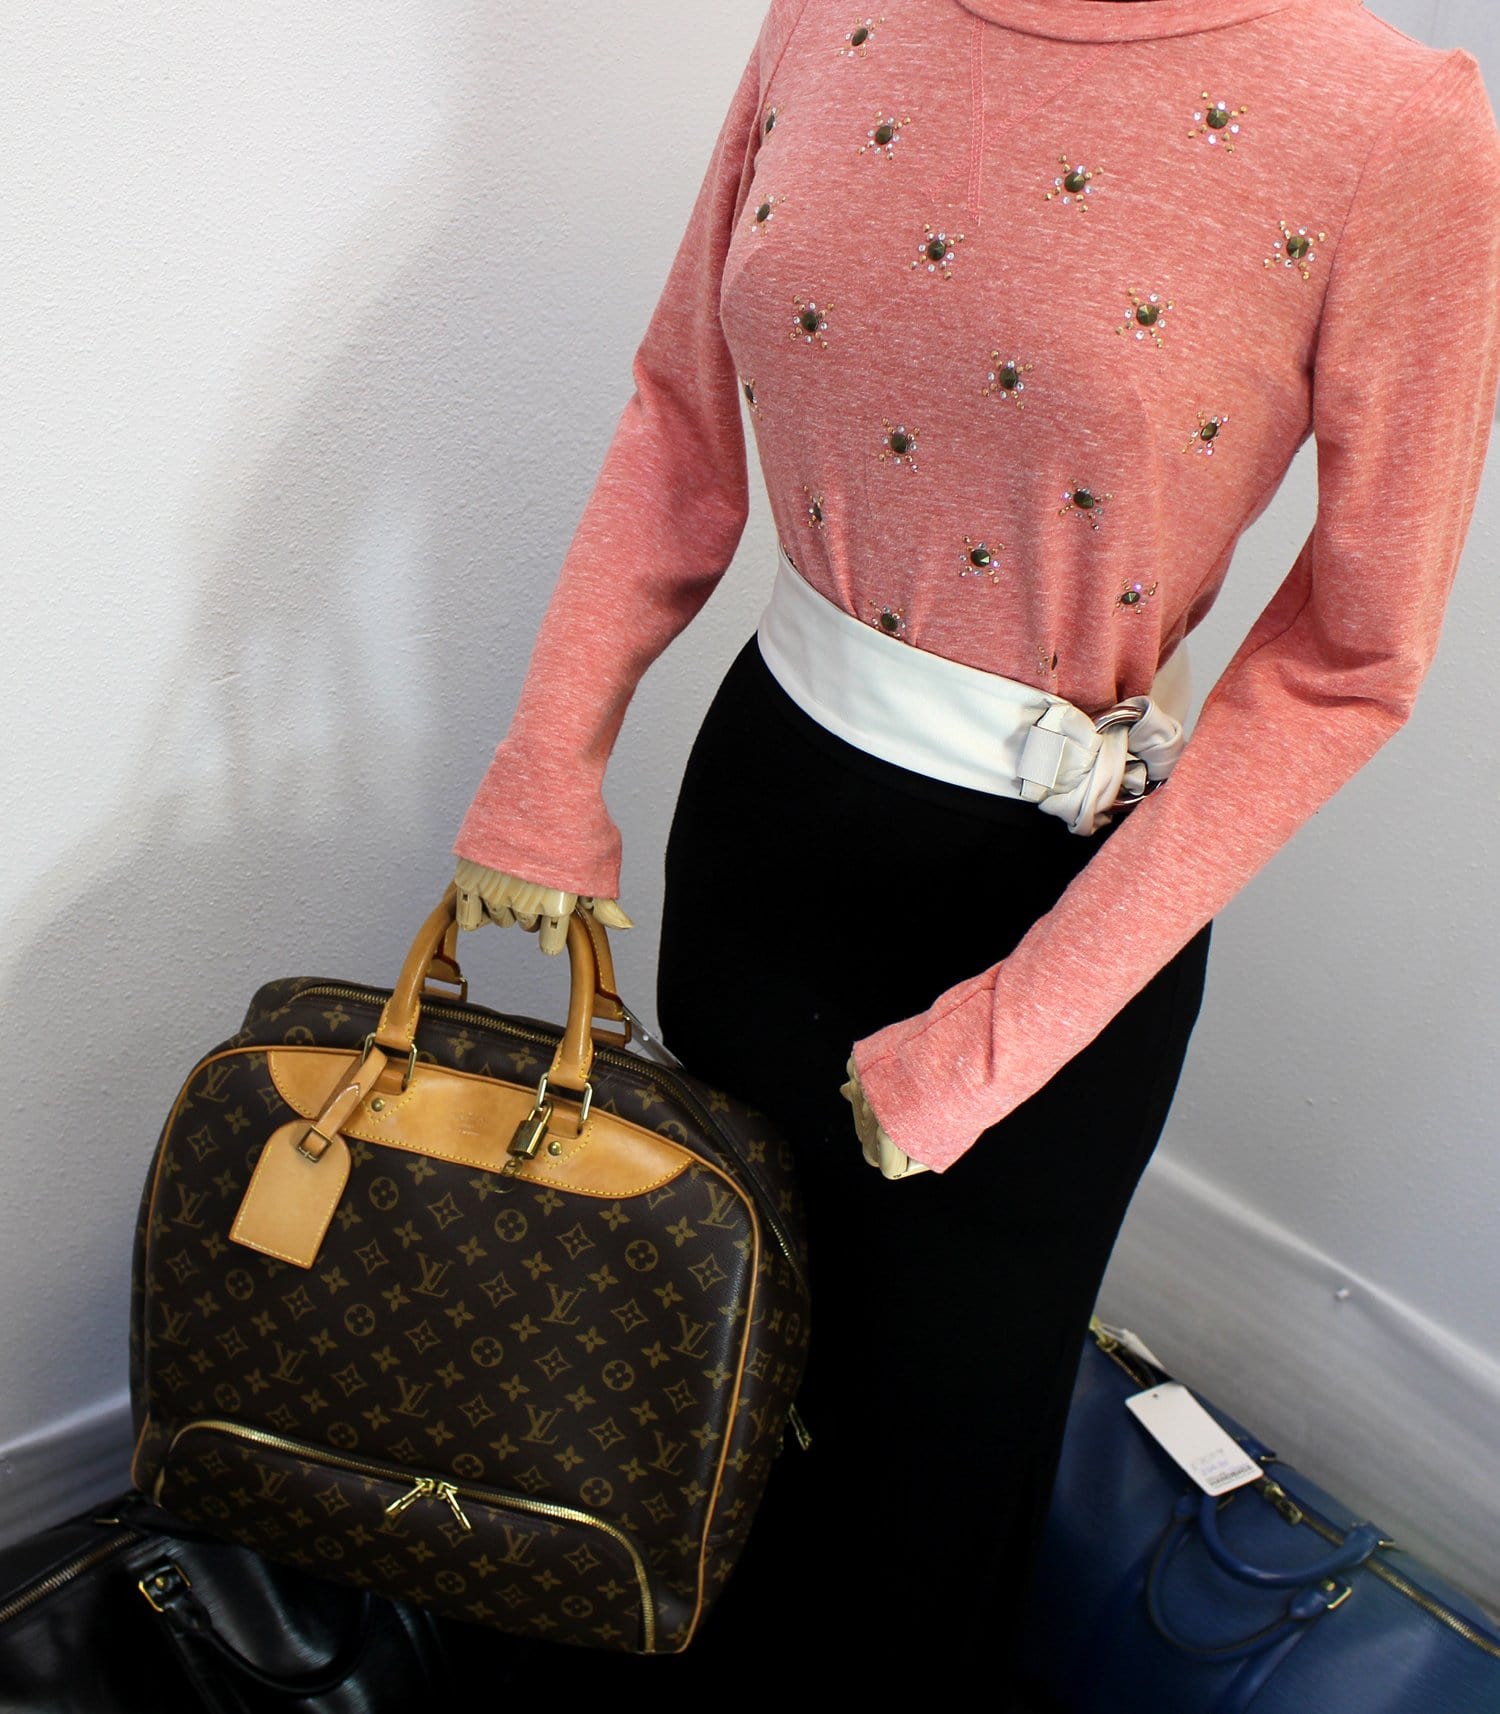 Louis Vuitton Monogram Evasion Travel Bag Luggage for Sale in